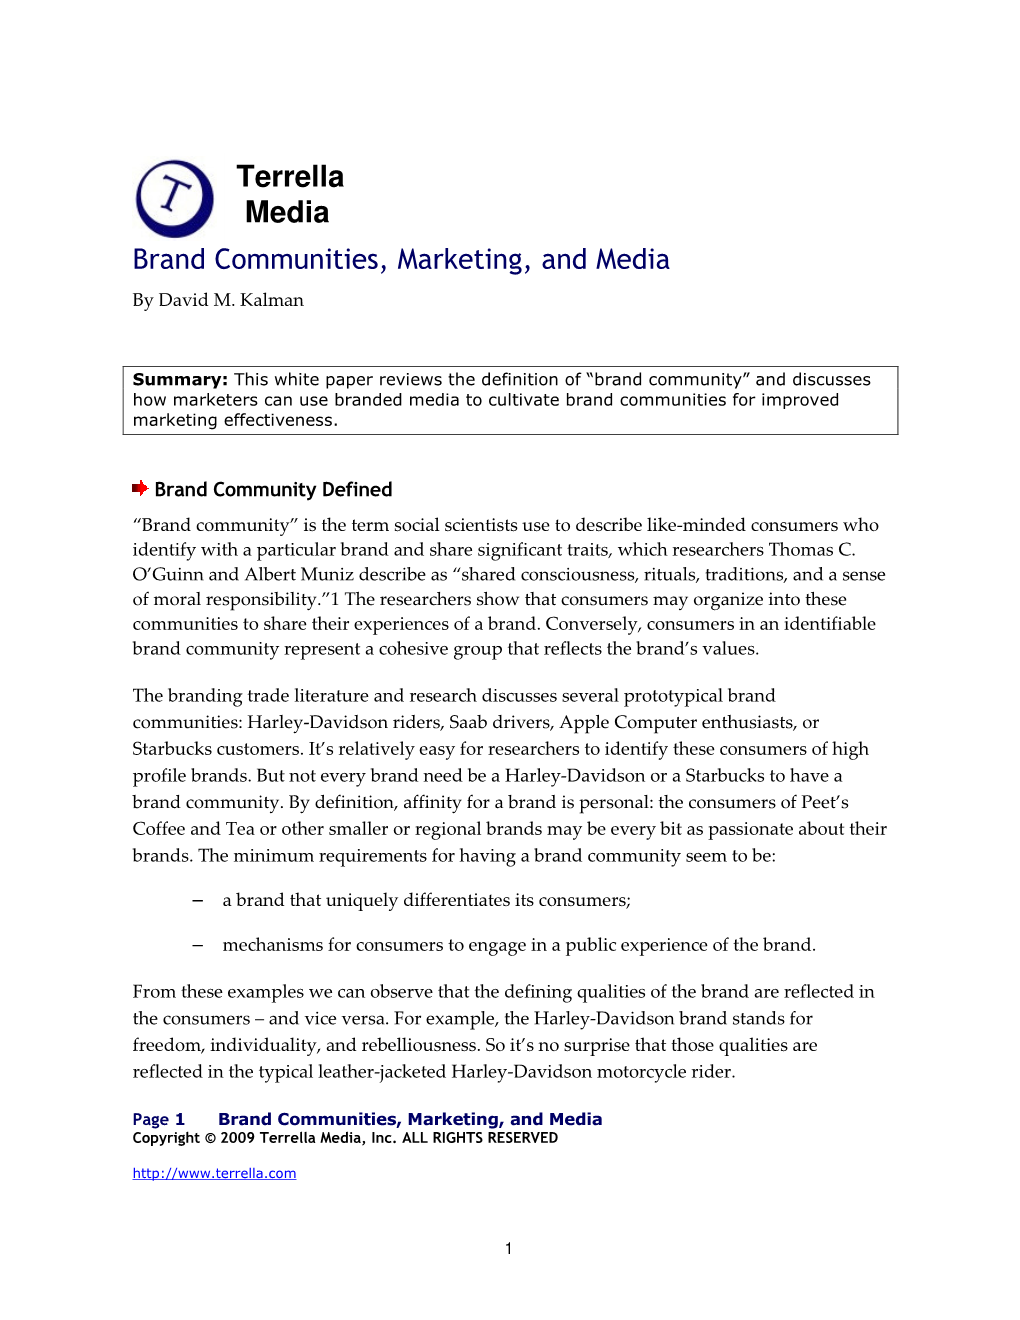 Brand Communities, Marketing, and Media by David M